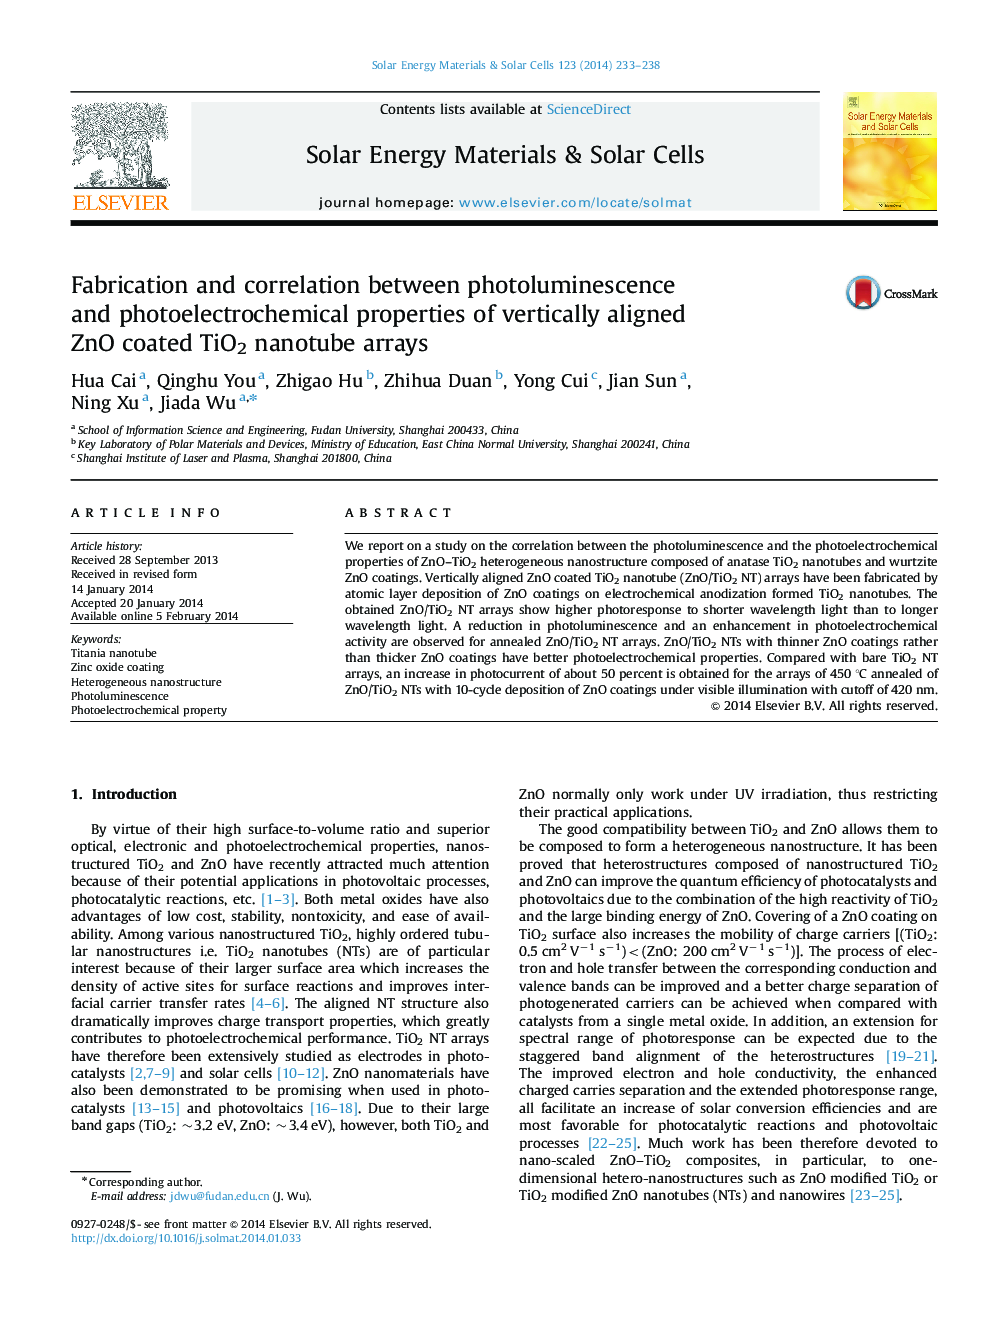 Fabrication and correlation between photoluminescence and photoelectrochemical properties of vertically aligned ZnO coated TiO2 nanotube arrays